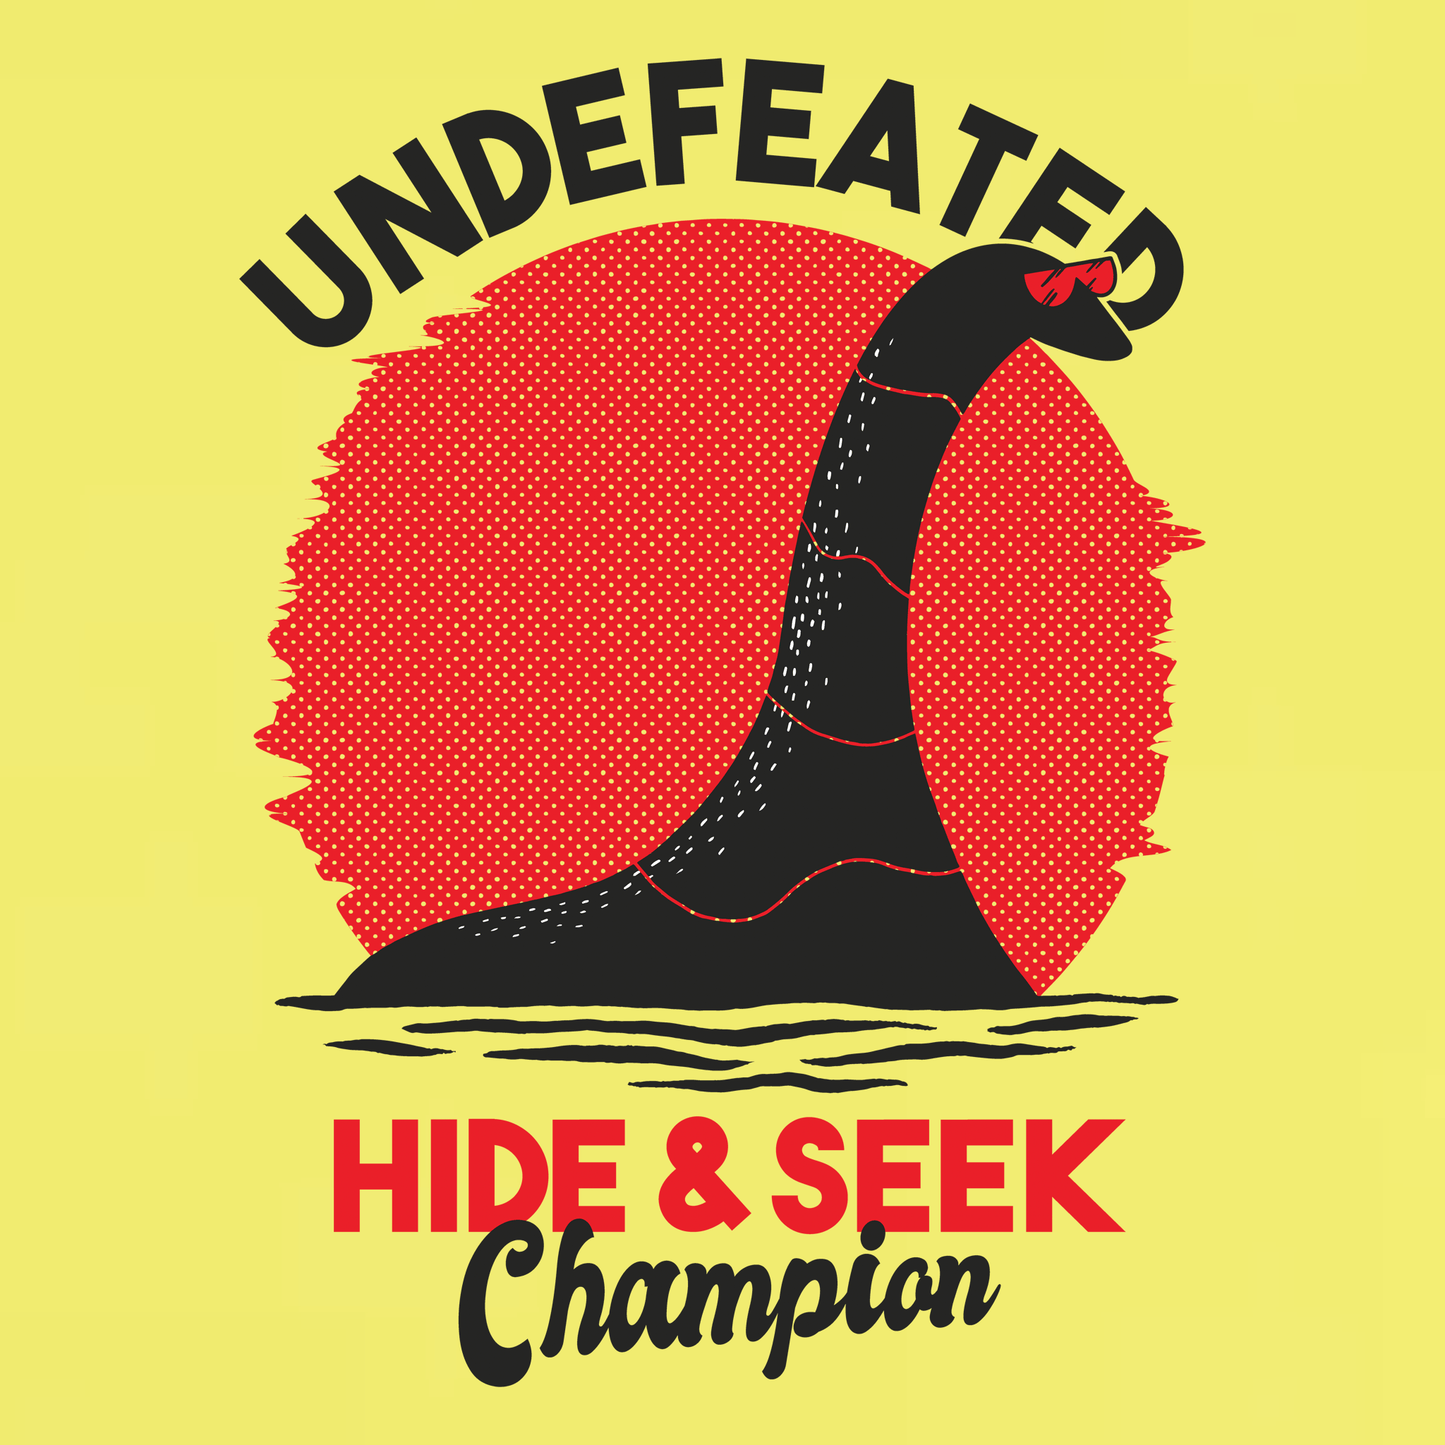 Nessie - Undefeated Hide & Seek Champion T-Shirt